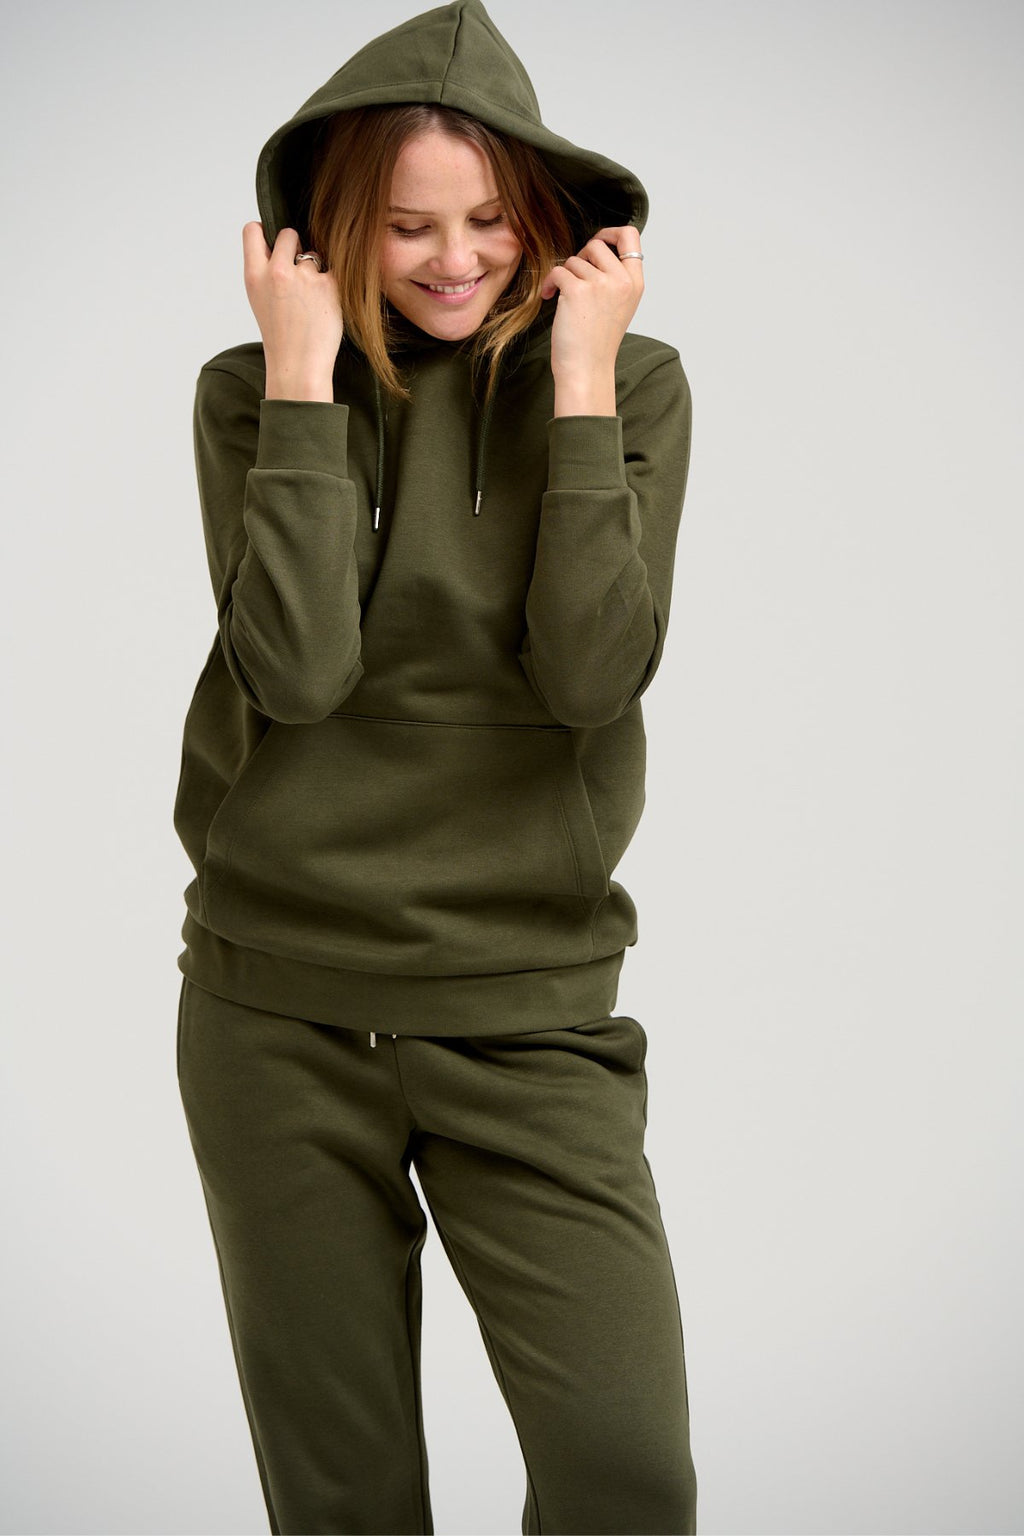 Basic Sweatsuit met hoodie (donkergroen) - pakketdeal (vrouwen)